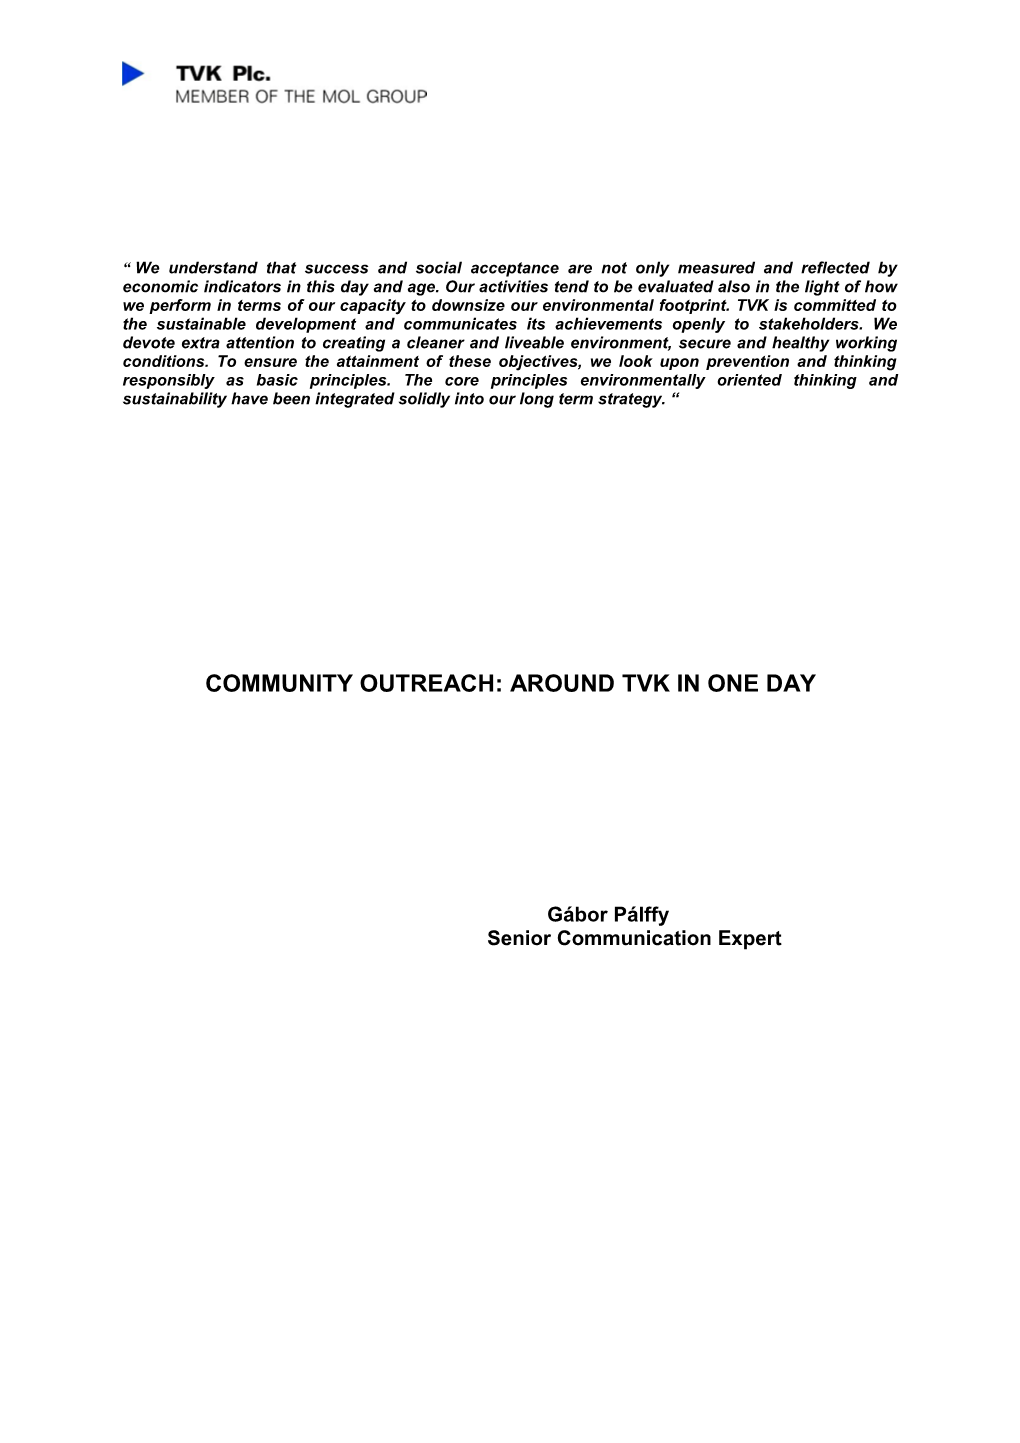 Community Outreach: Around Tvk in One Day